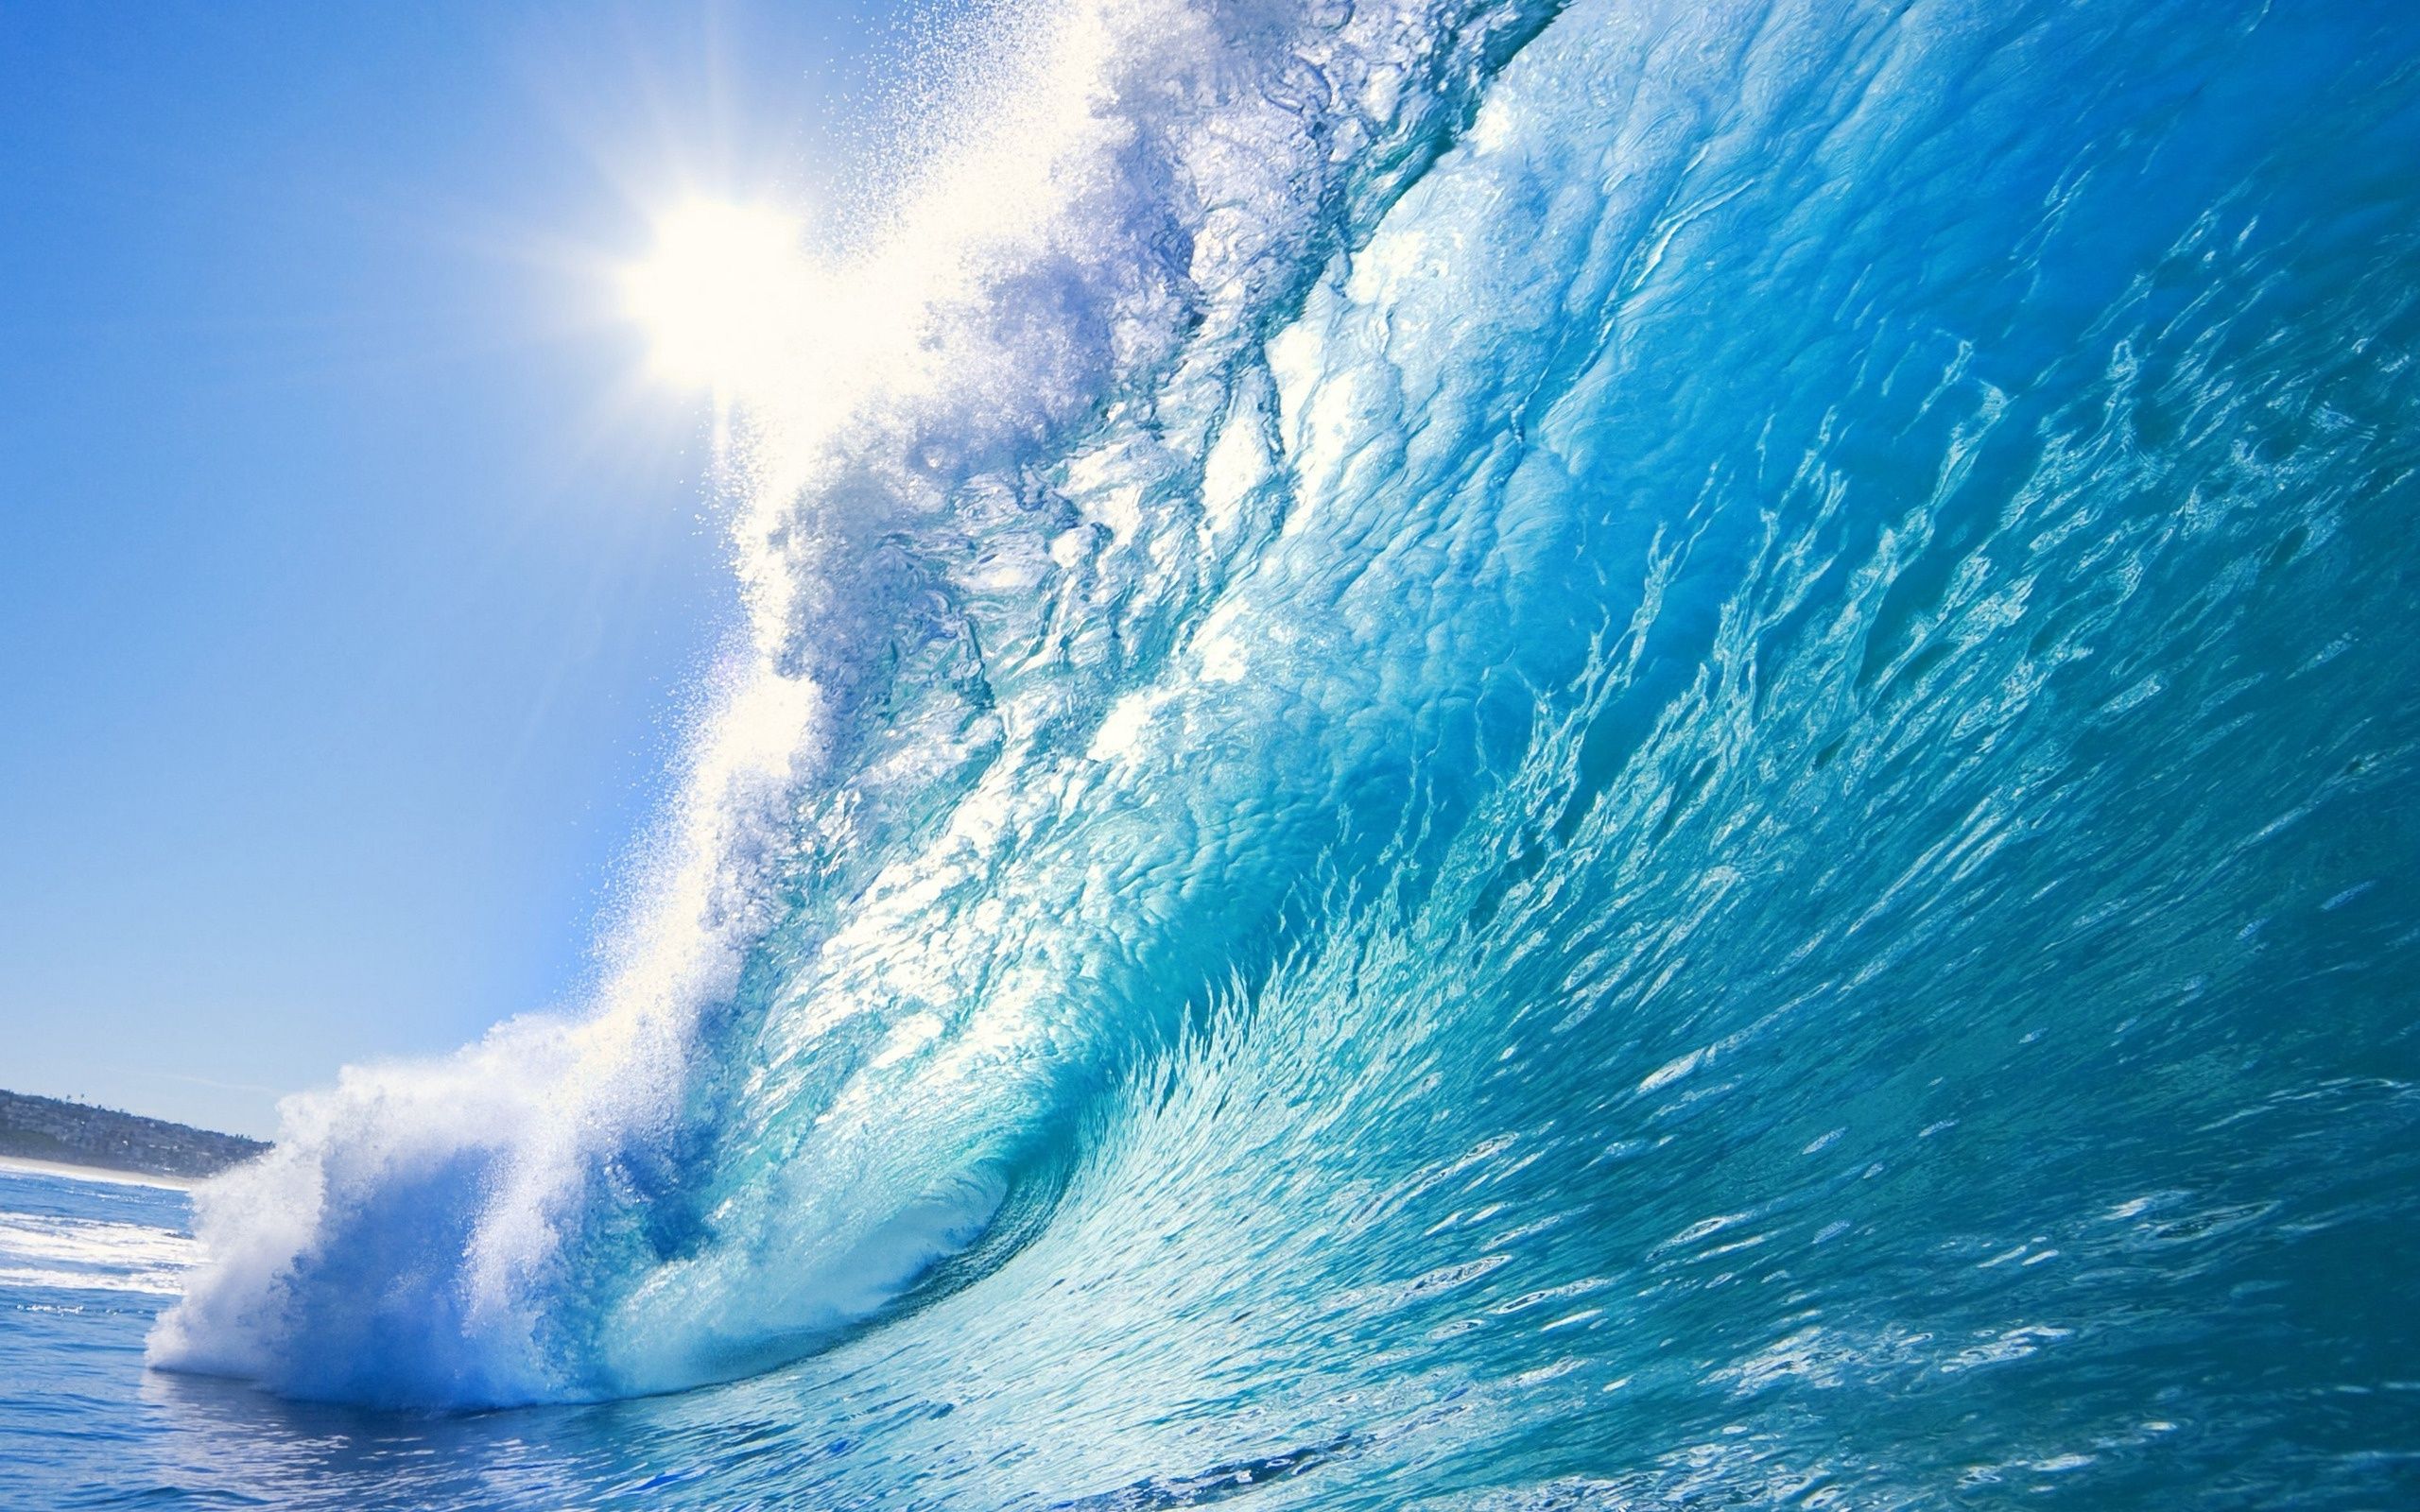 Ocean Waves hd Wallpapers lovely hd desktop background wallpapers of 2560x1600